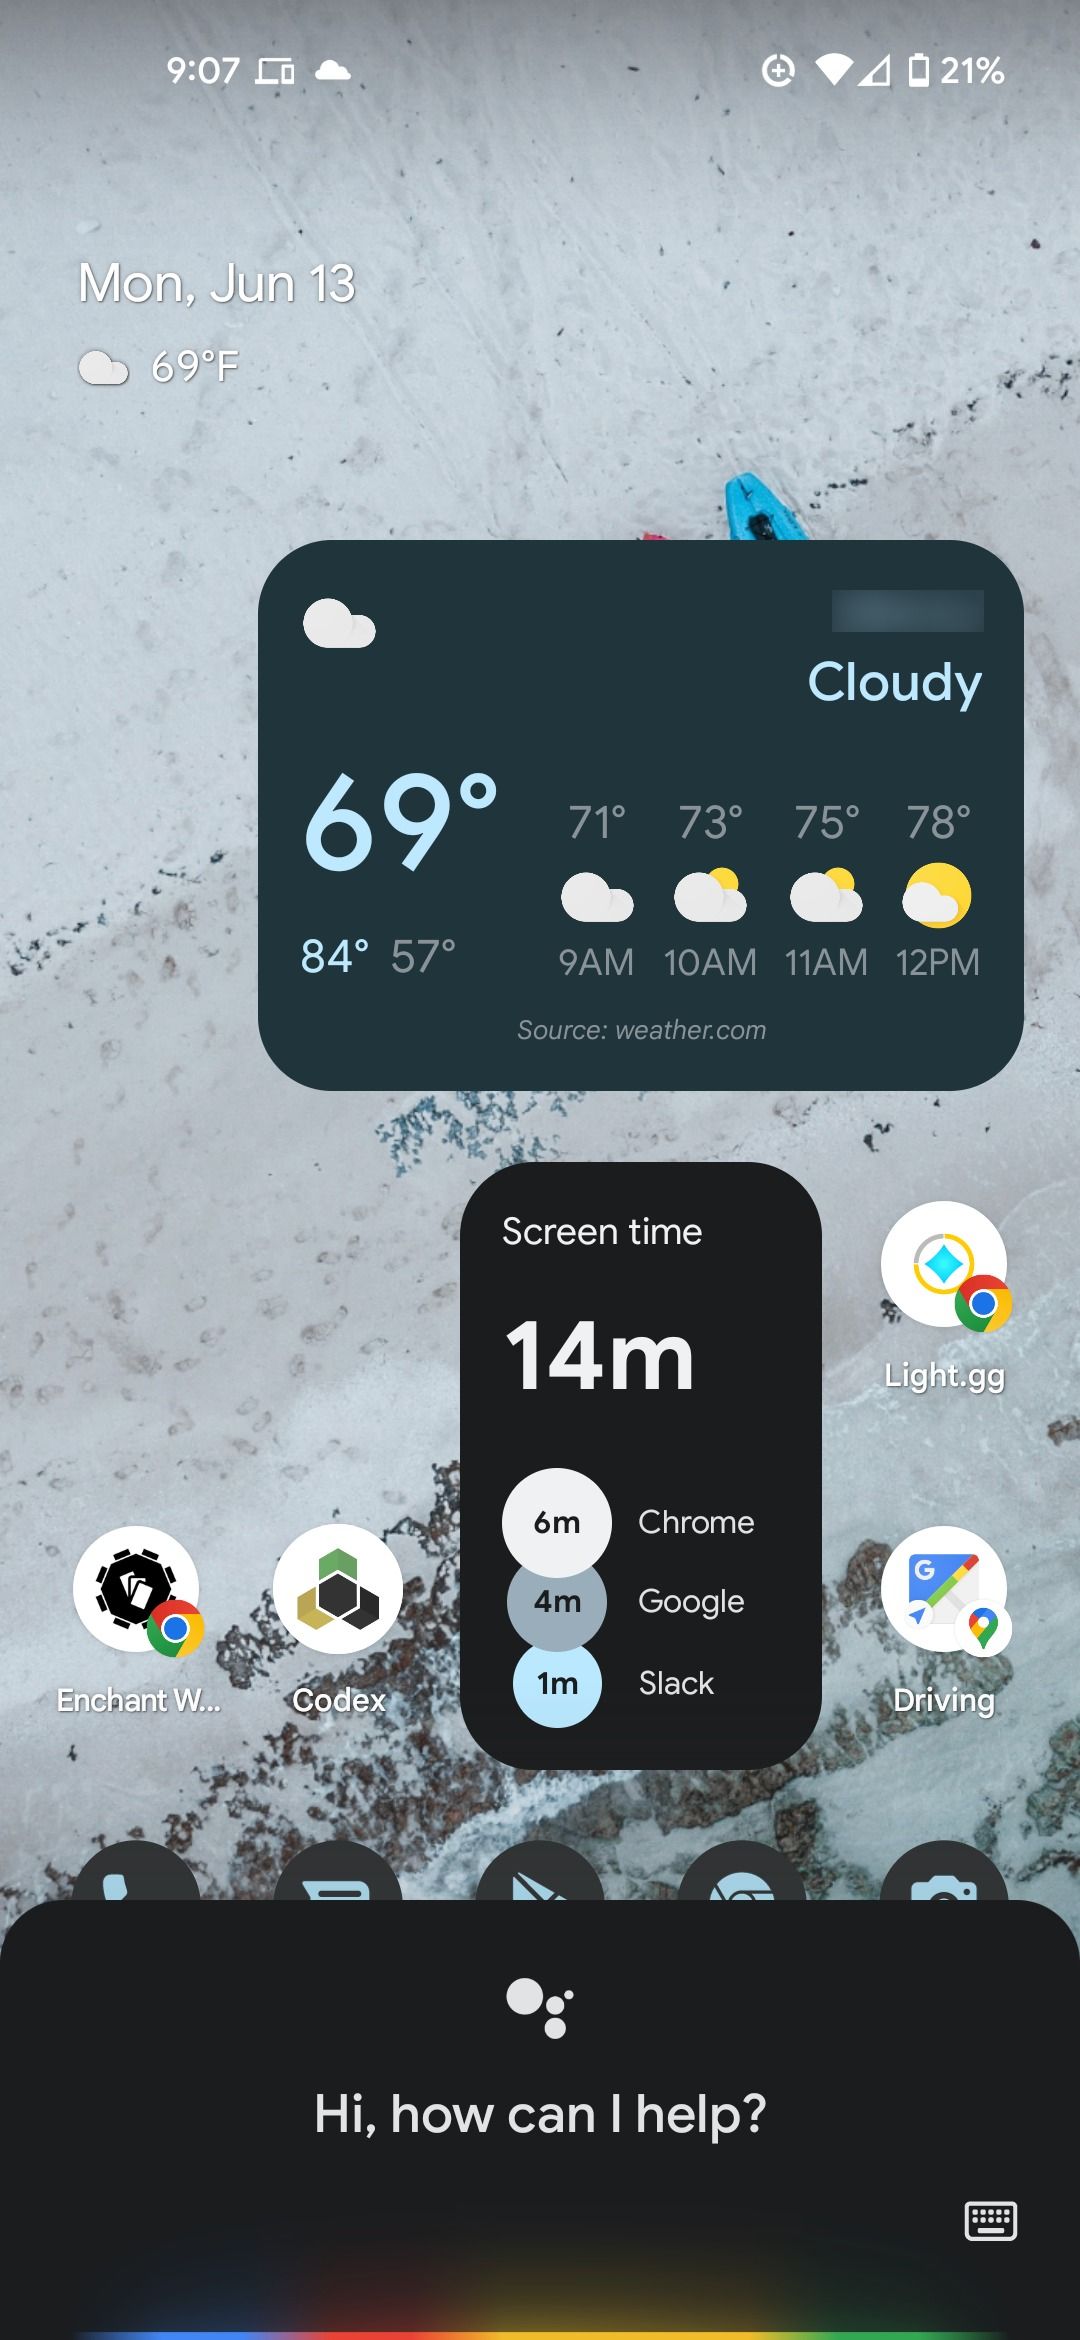 Iniciando o Google Assistant na tela inicial do telefone Android